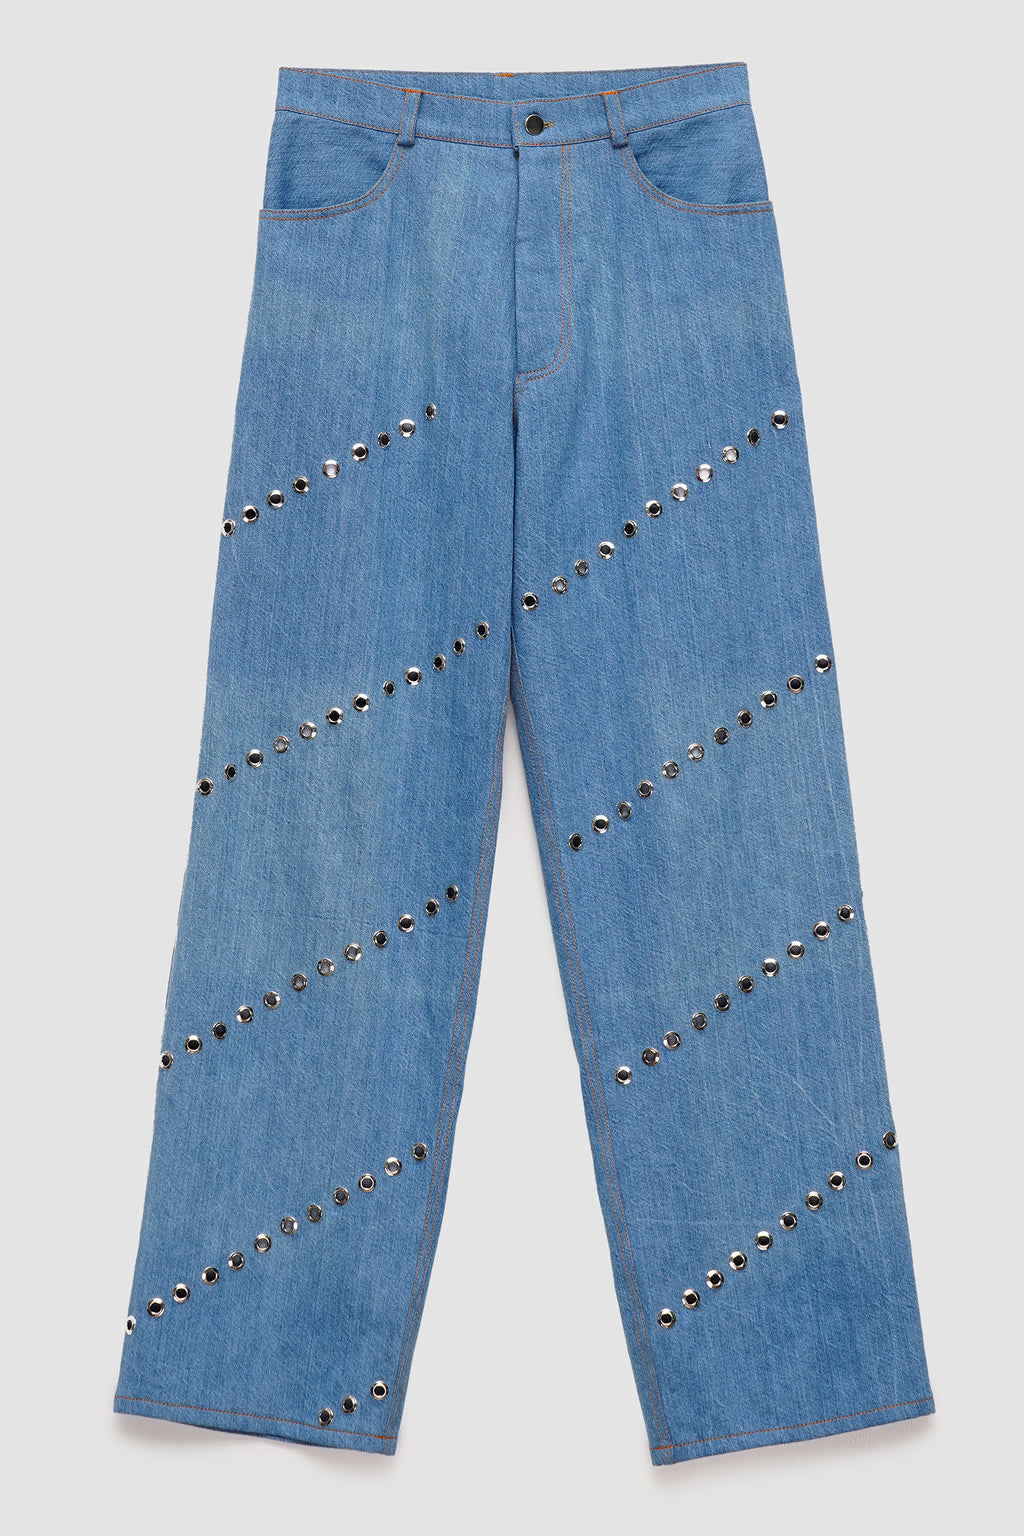 'Vertigo' Jeans in Blue